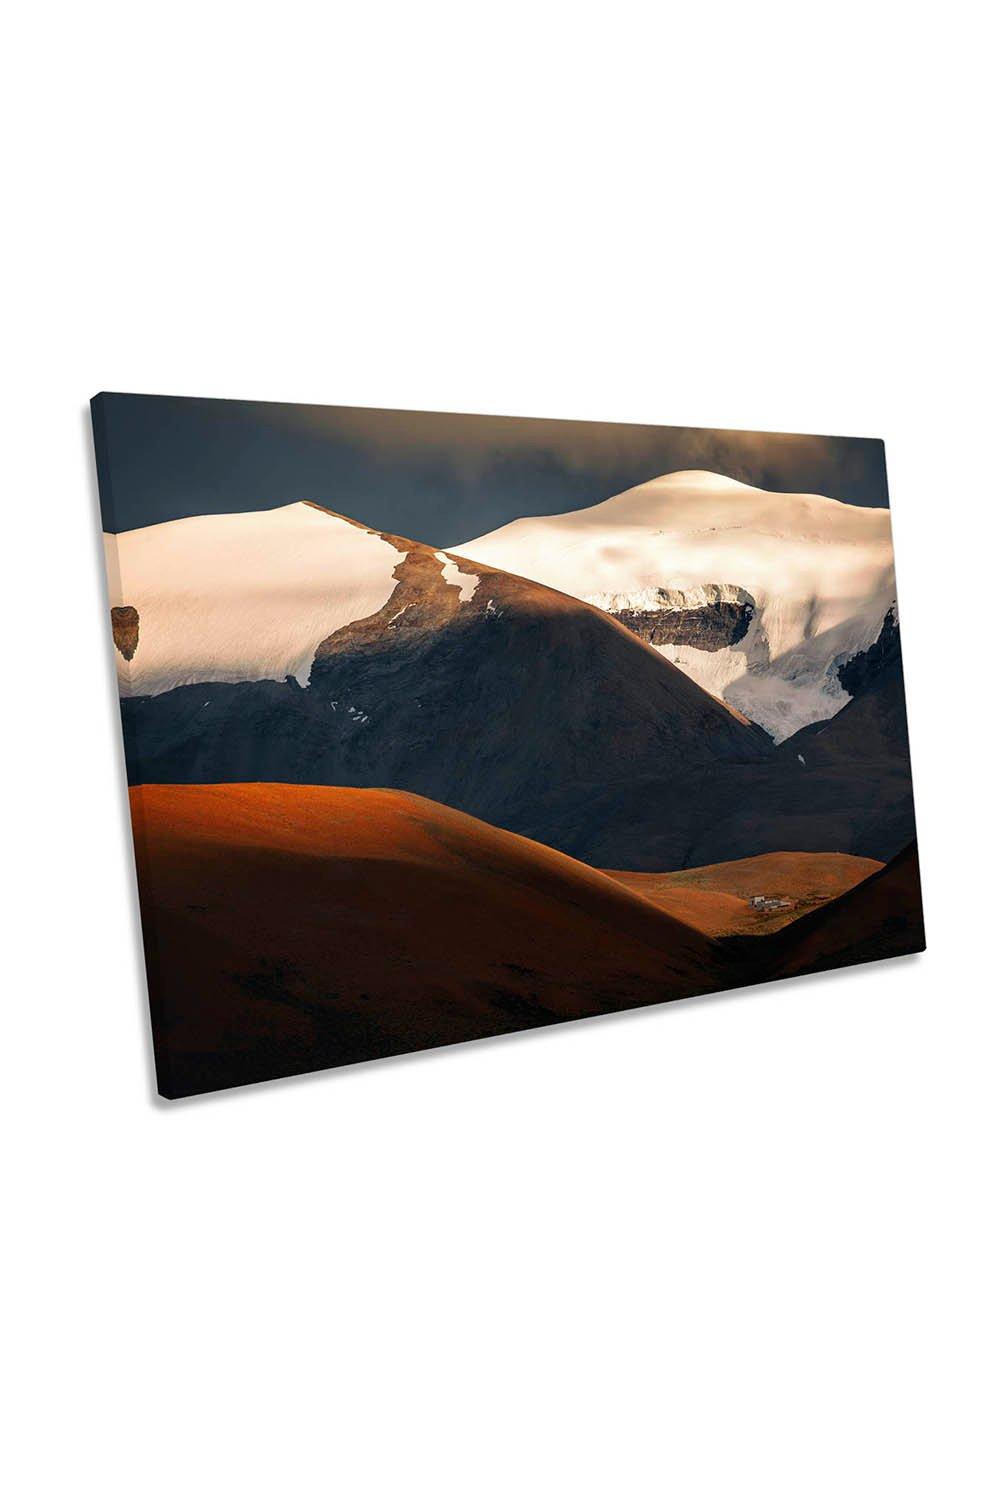 Brown Mountain Landscape Glacier Snow Canvas Wall Art Picture Print